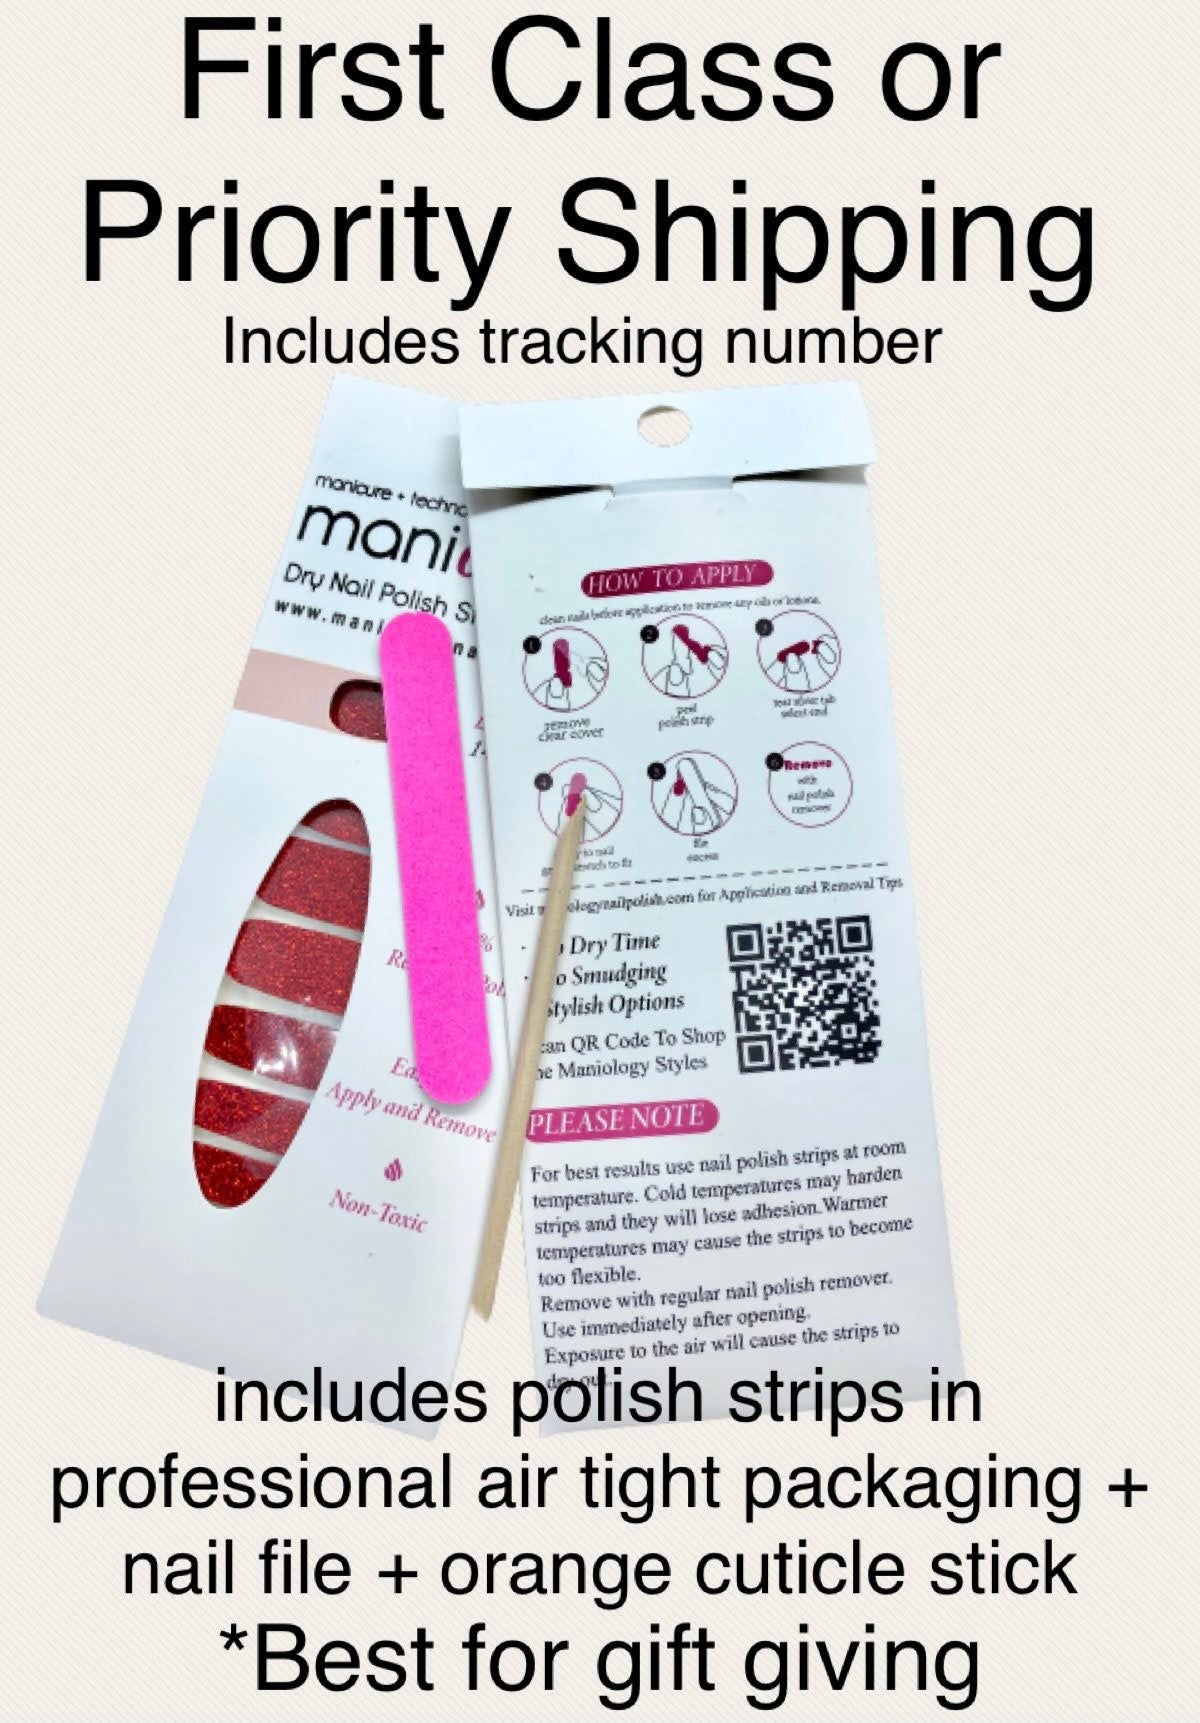 Plum Solid Finish, ManiCURE  Real Nail Polish Strips, Dry Nail Polish, Nail Wraps, Stickers, Long Lasting, Non Toxic - manicurenailpolish